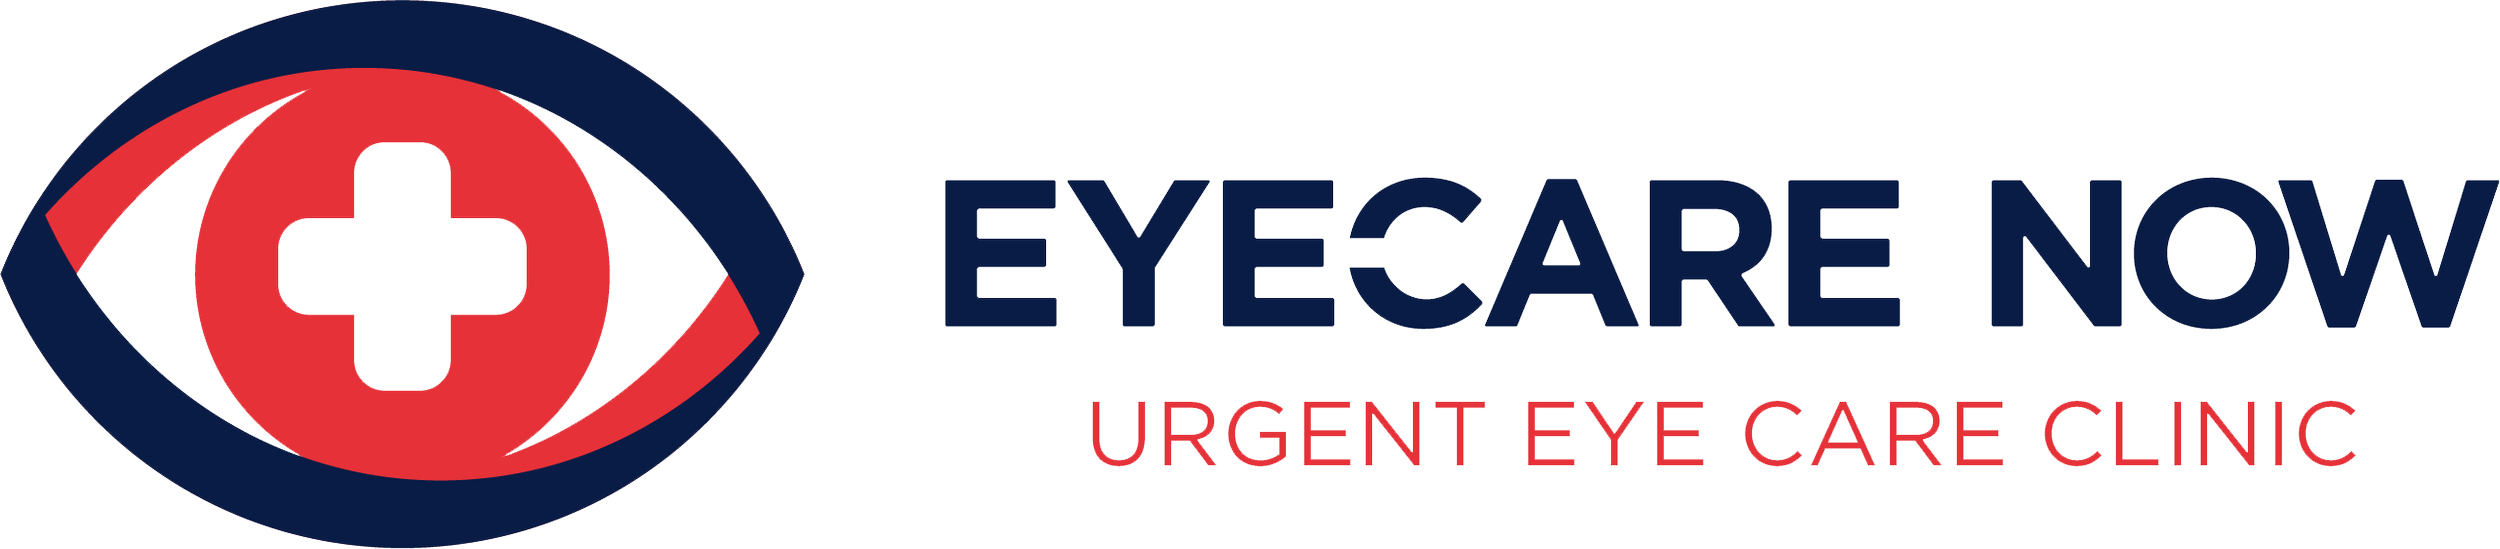 Eyecare Now